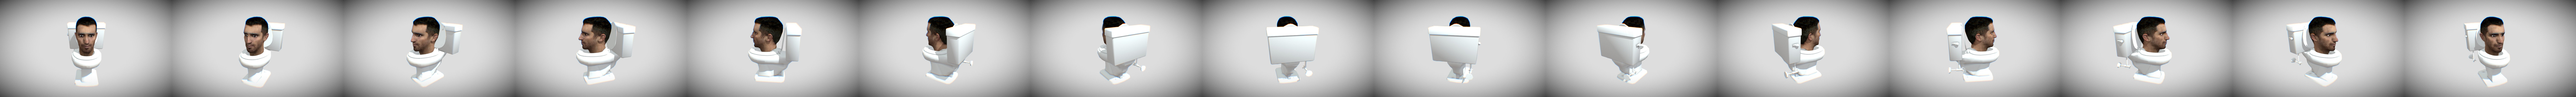 Broken 3.0 g-man skibidi toilet - Download Free 3D model by What the heck!?  Boom! (@Dafukbooooom) [43a7600]